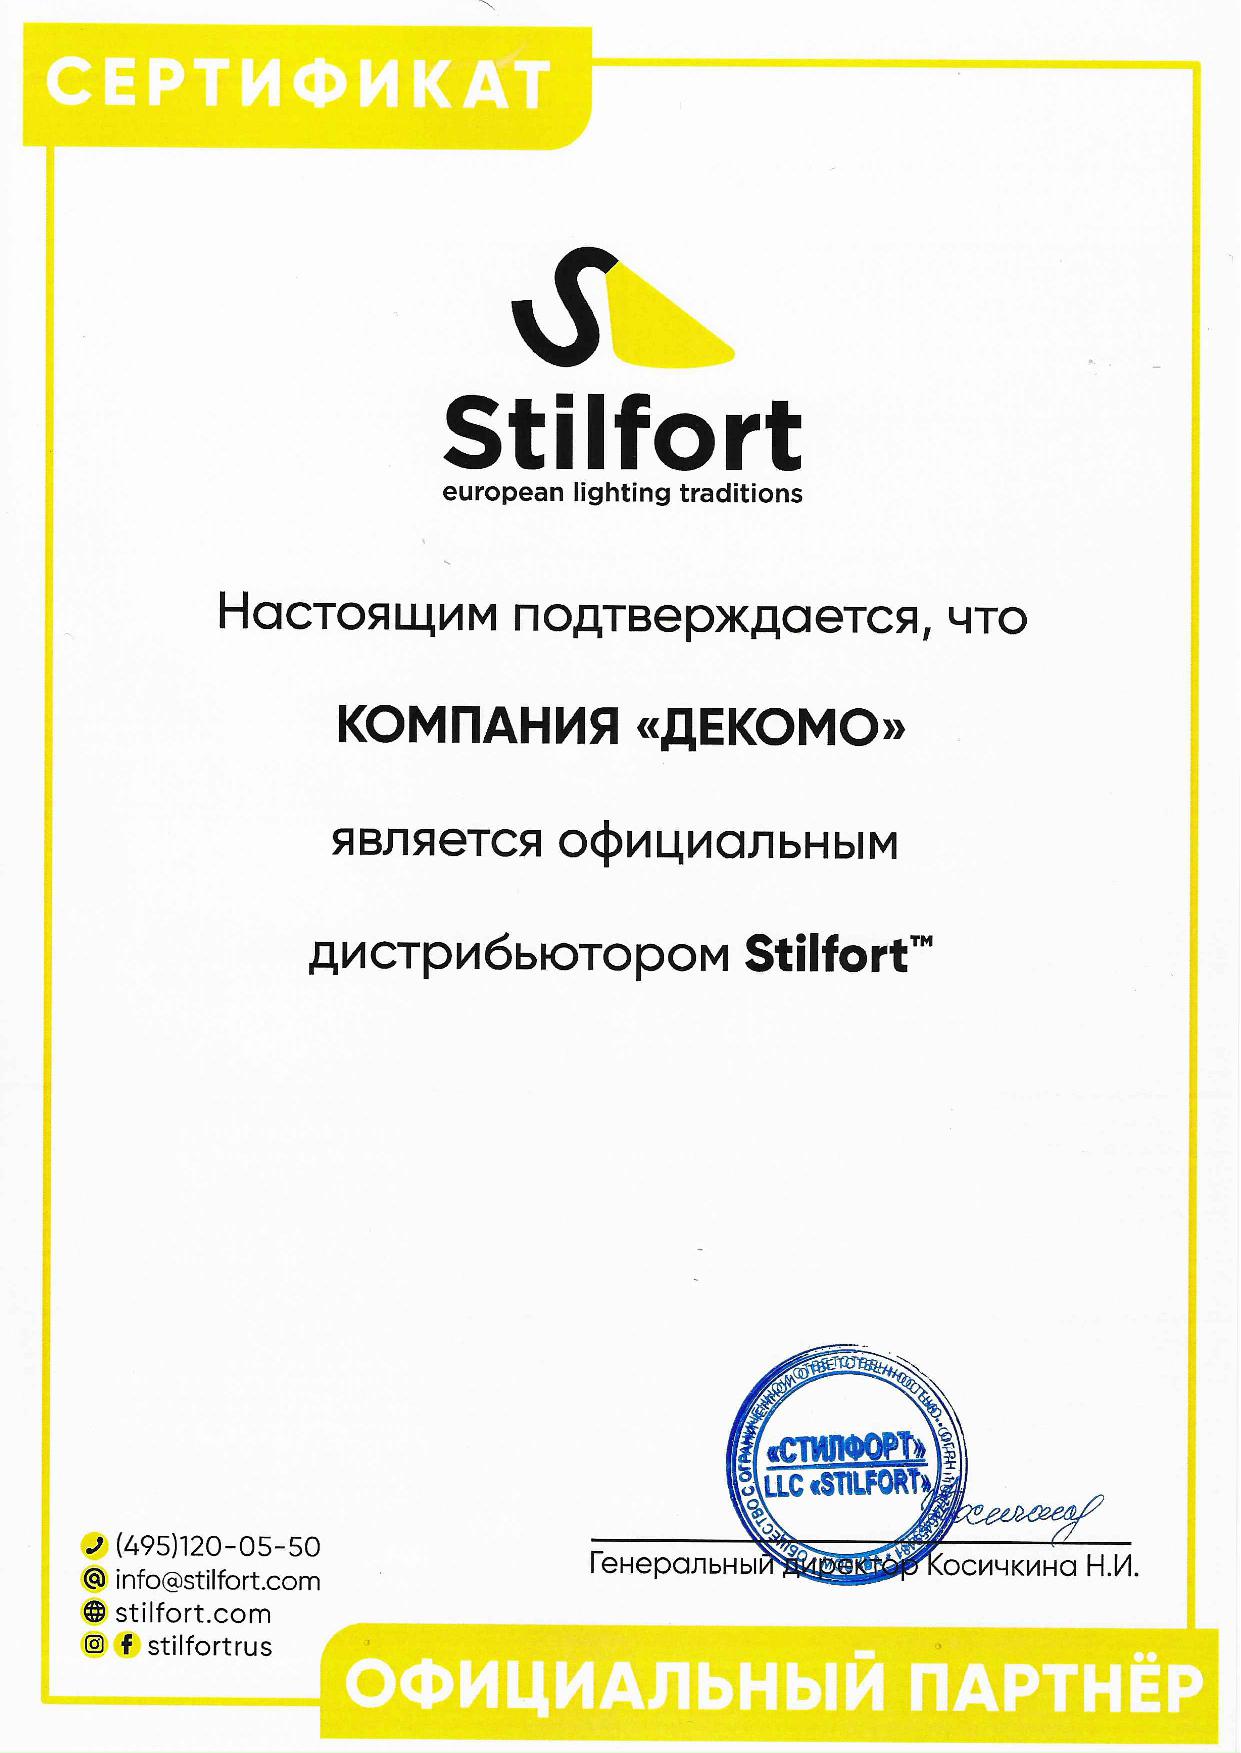 Сертификат Stilfort